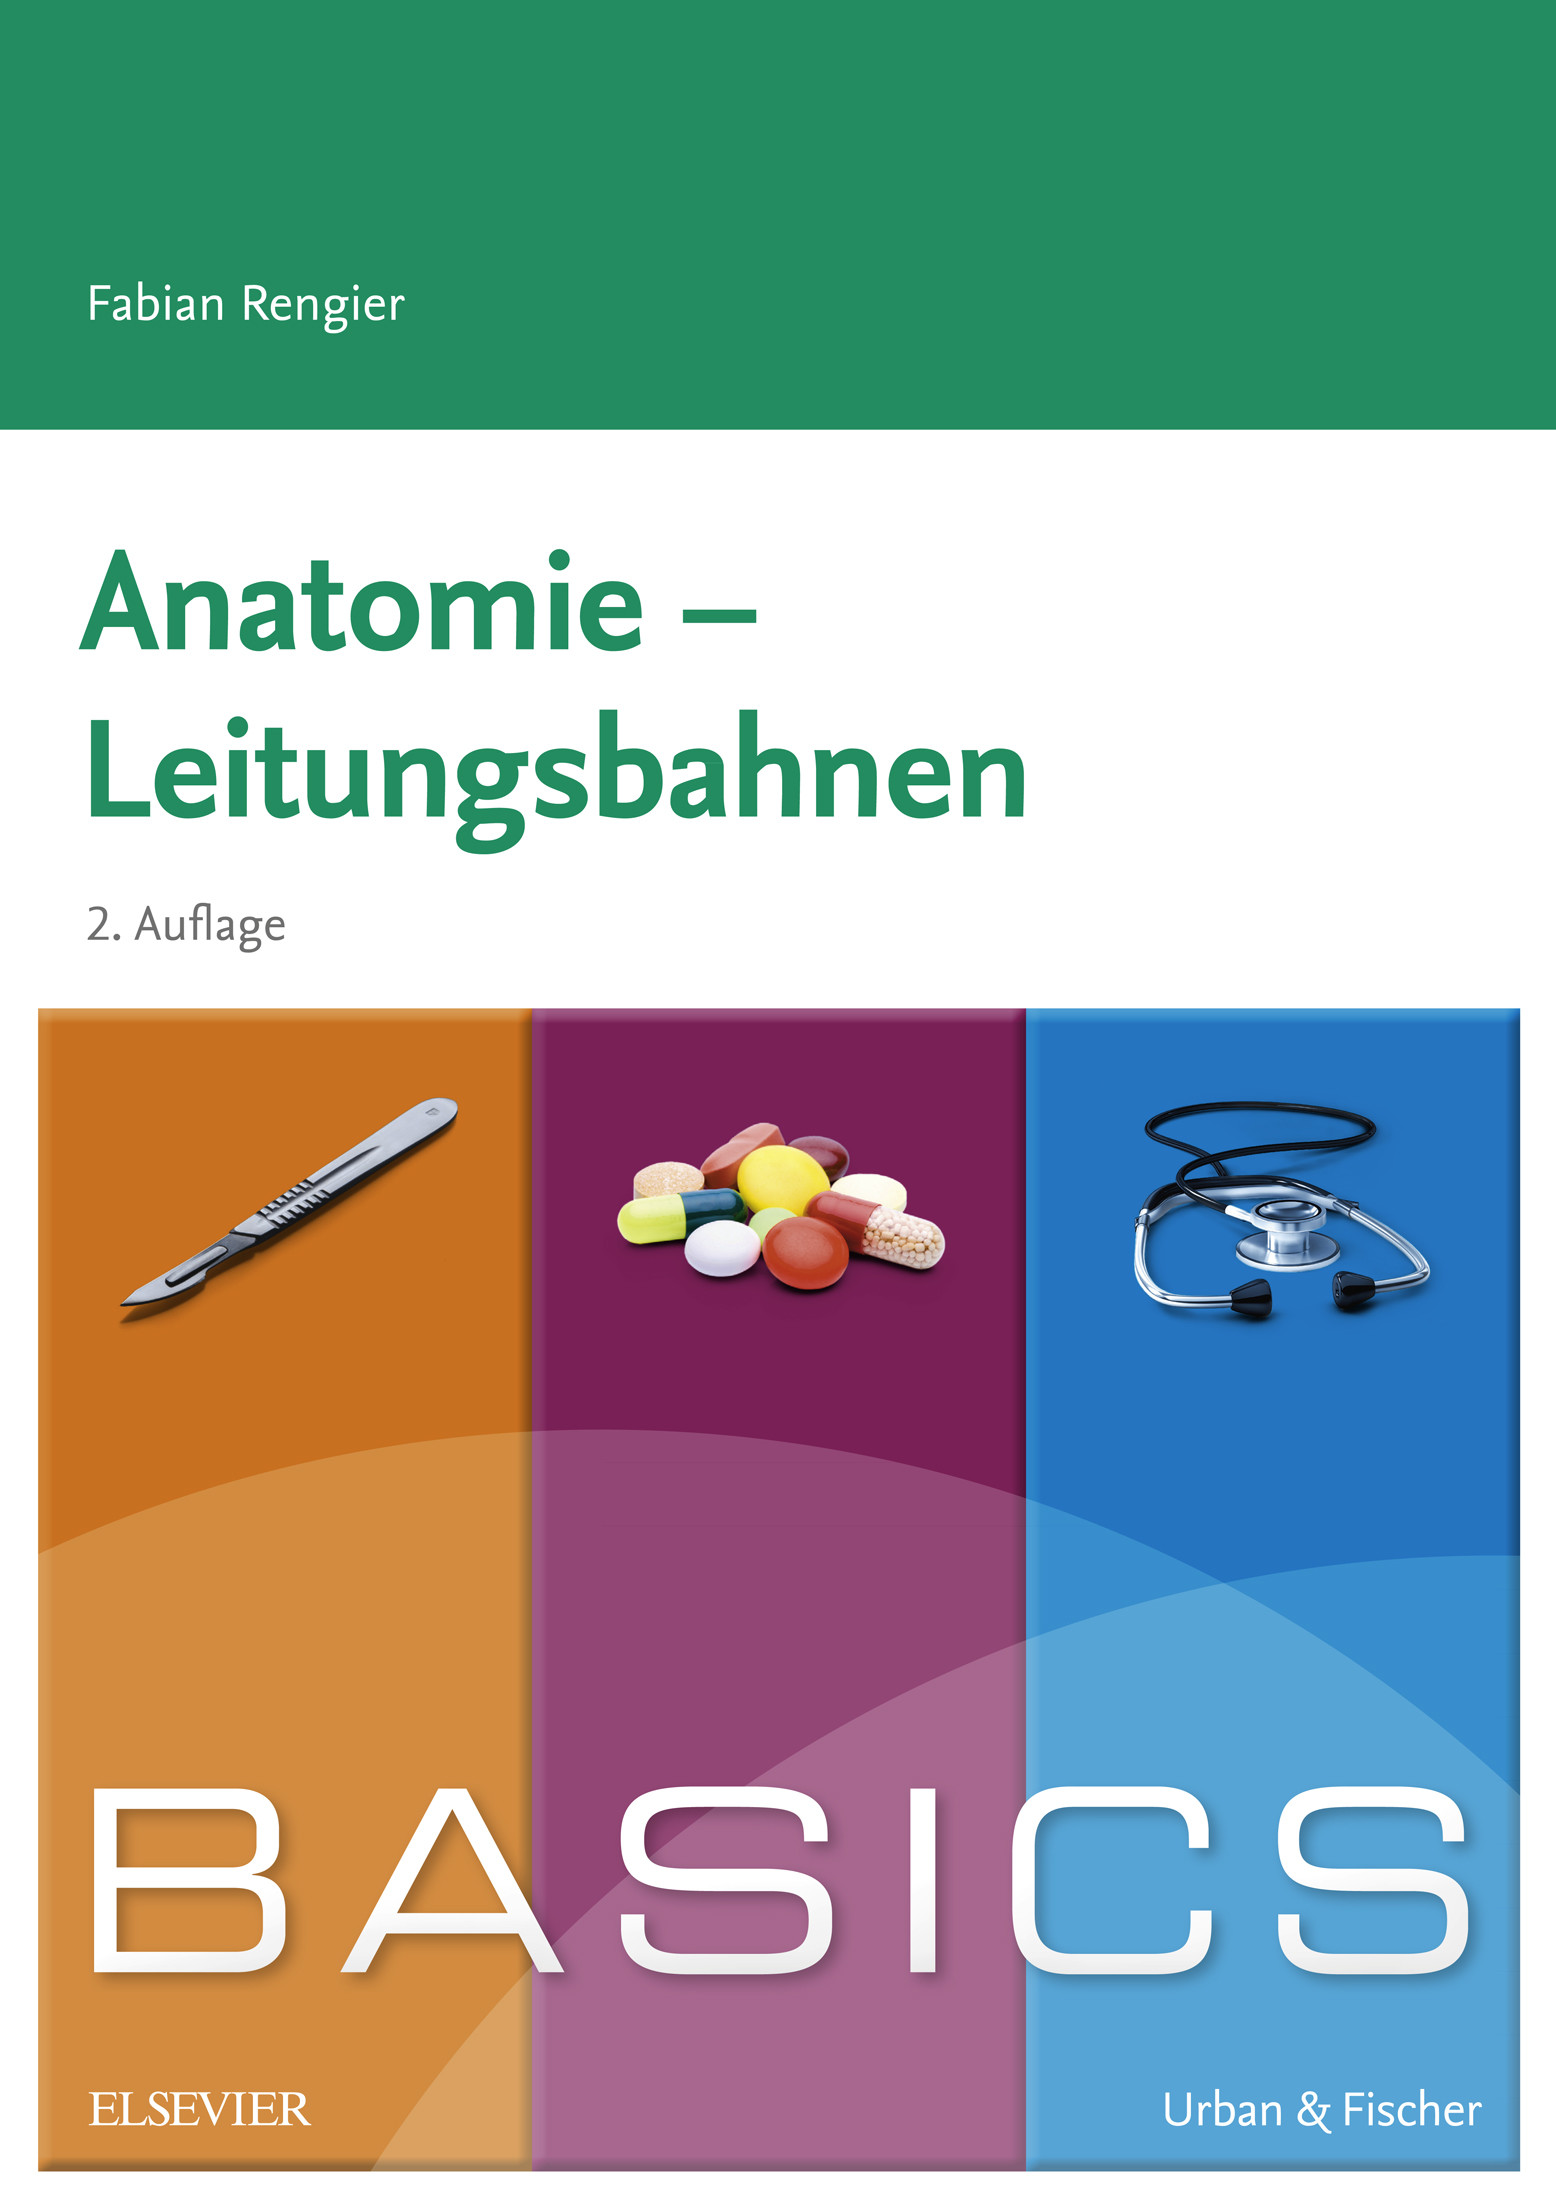 Cover BASICS Anatomie - Leitungsbahnen